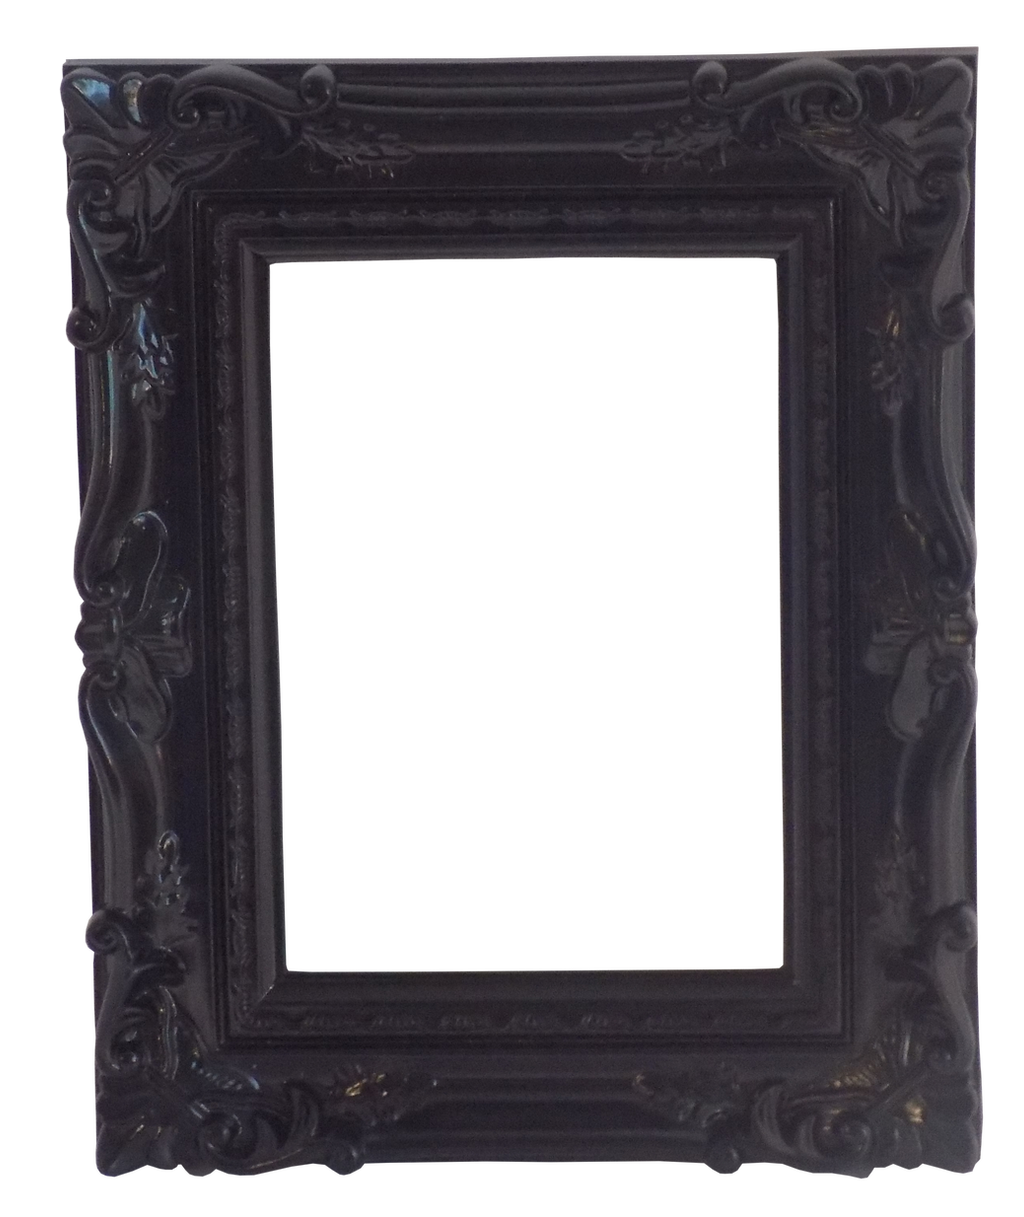 Ornate Black Frame By Enchantedwhispersart On Deviantart